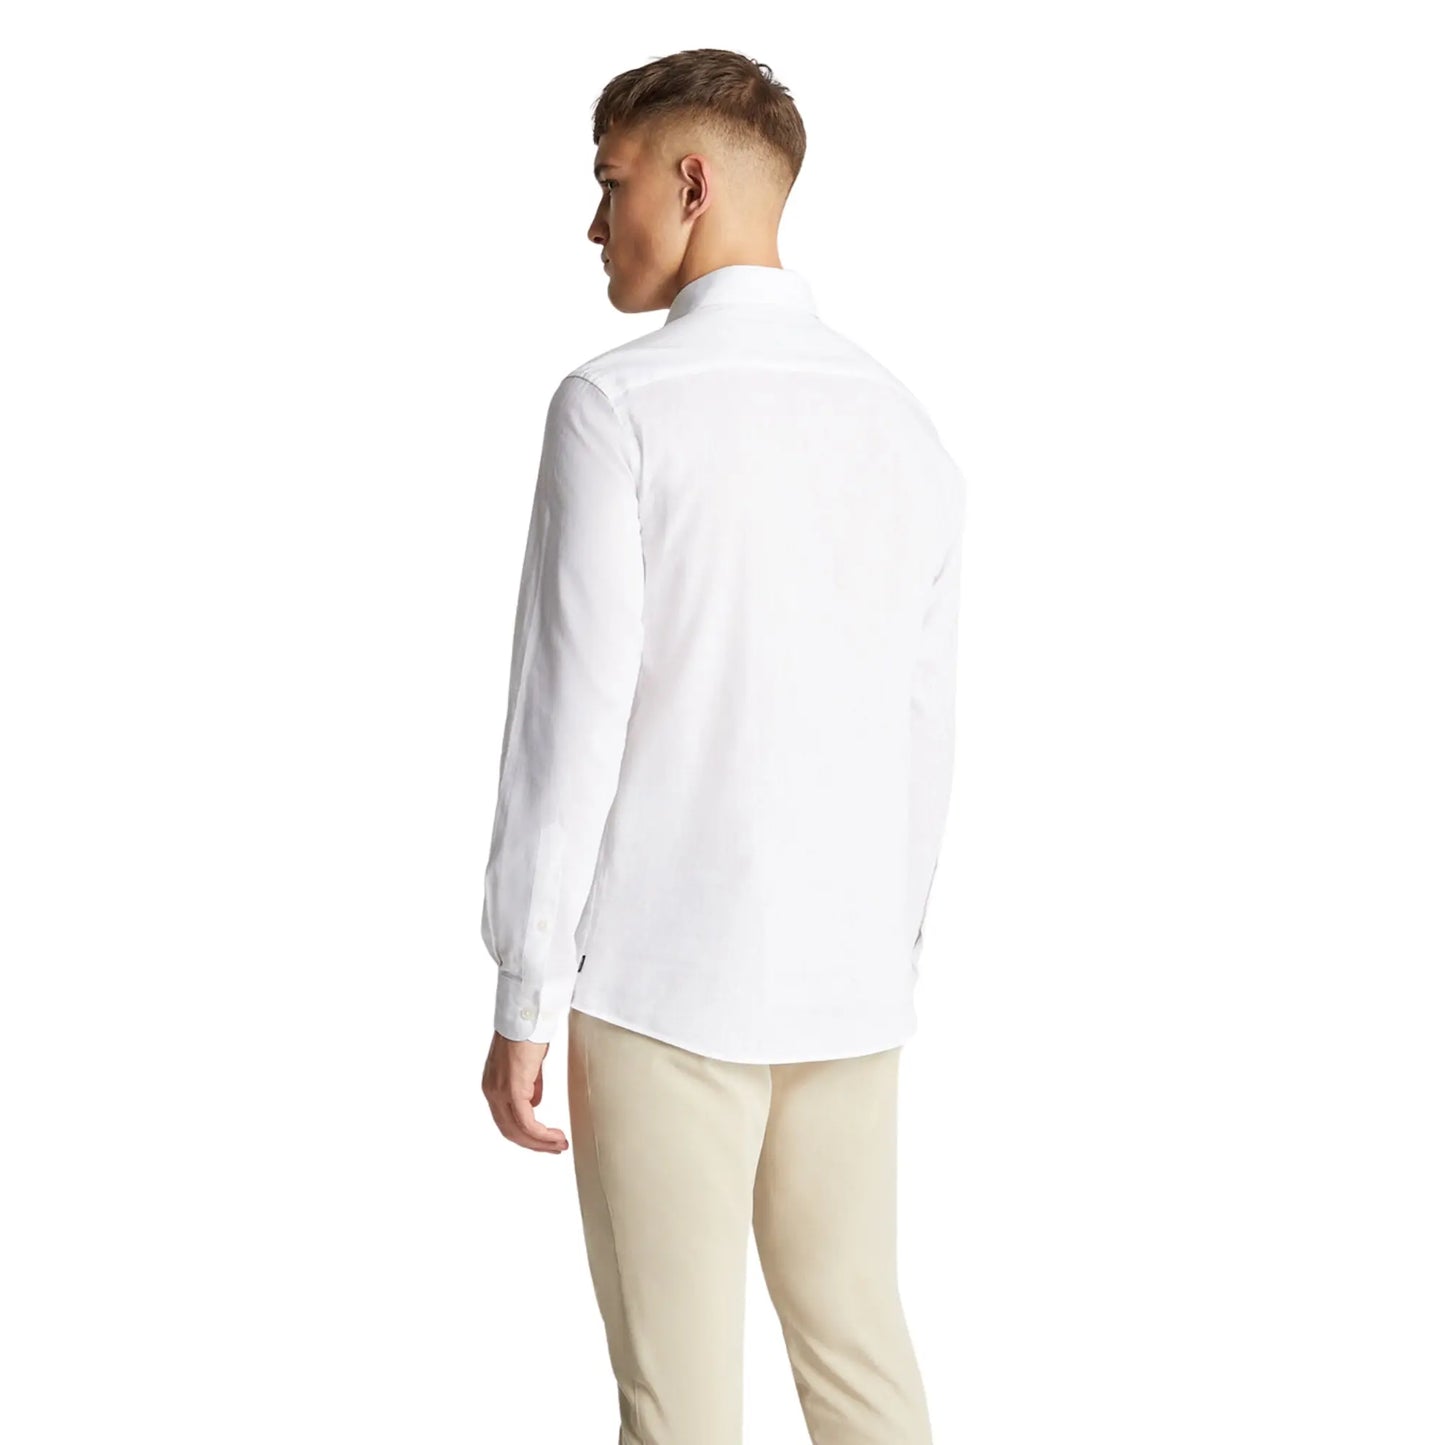 Buy Remus Uomo Frank Linen Long Sleeve Shirt - White | Long-Sleeved Shirtss at Woven Durham